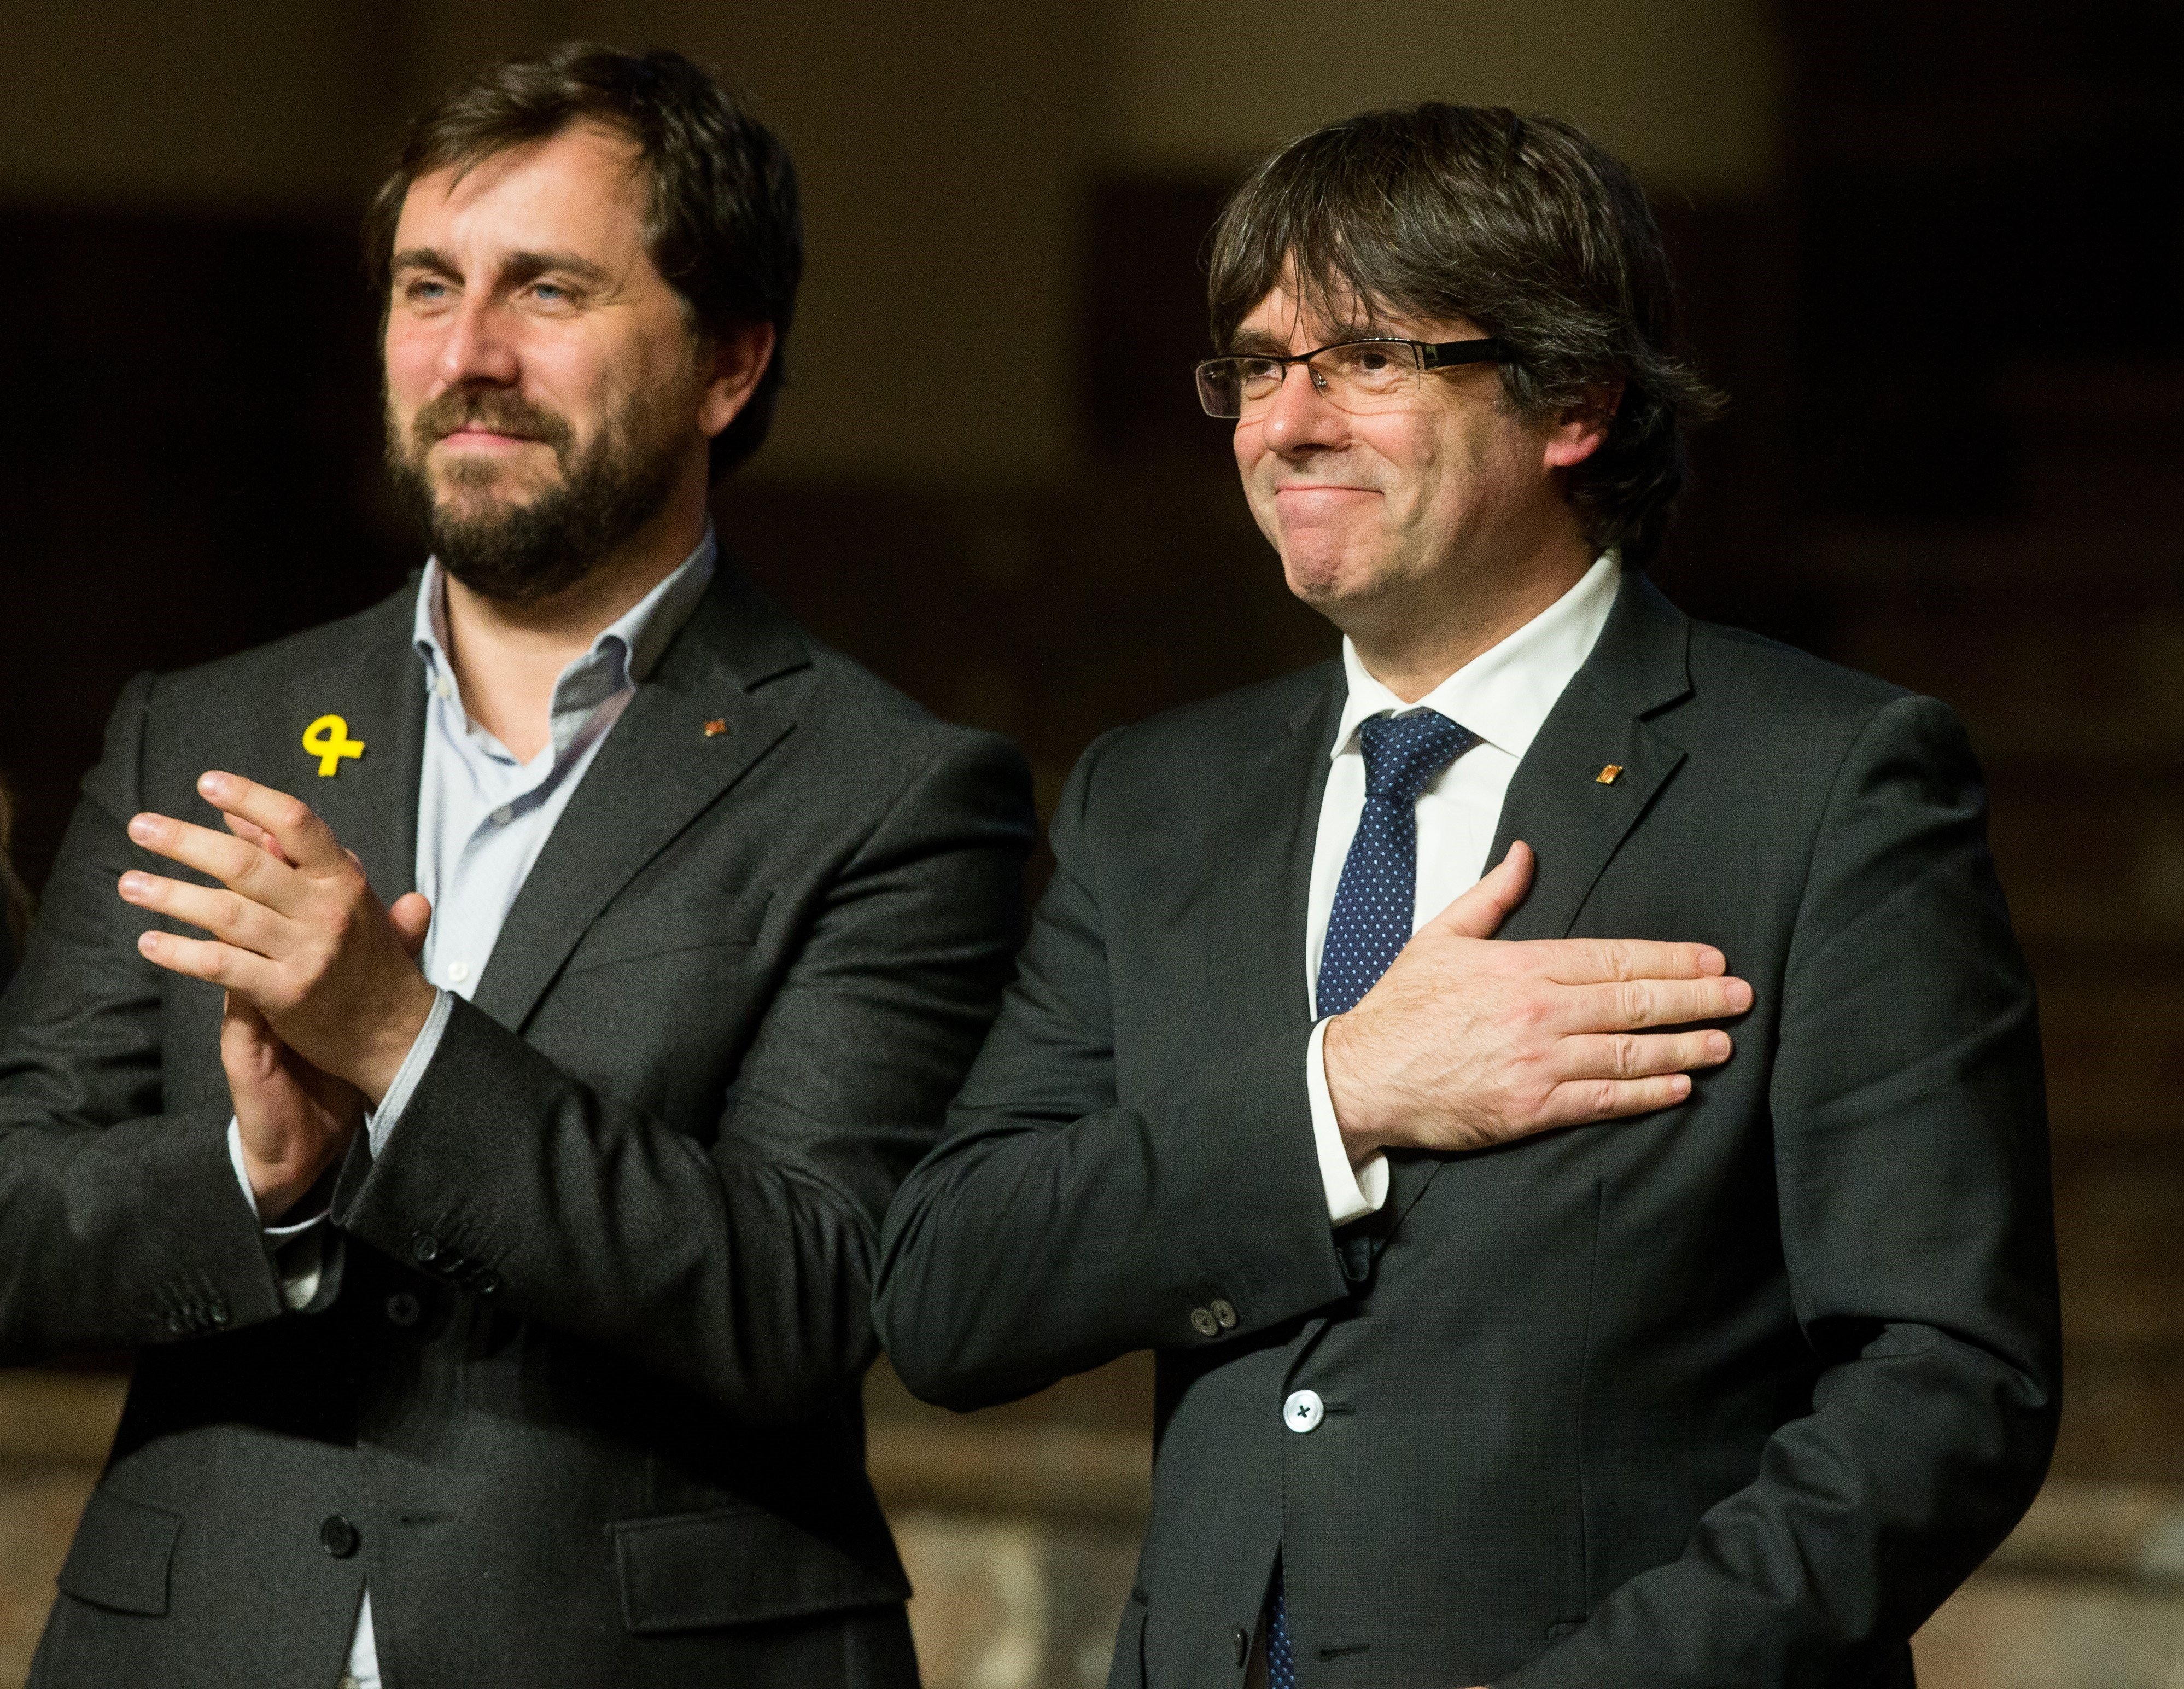 El TC manté el vot delegat de Puigdemont i Comín